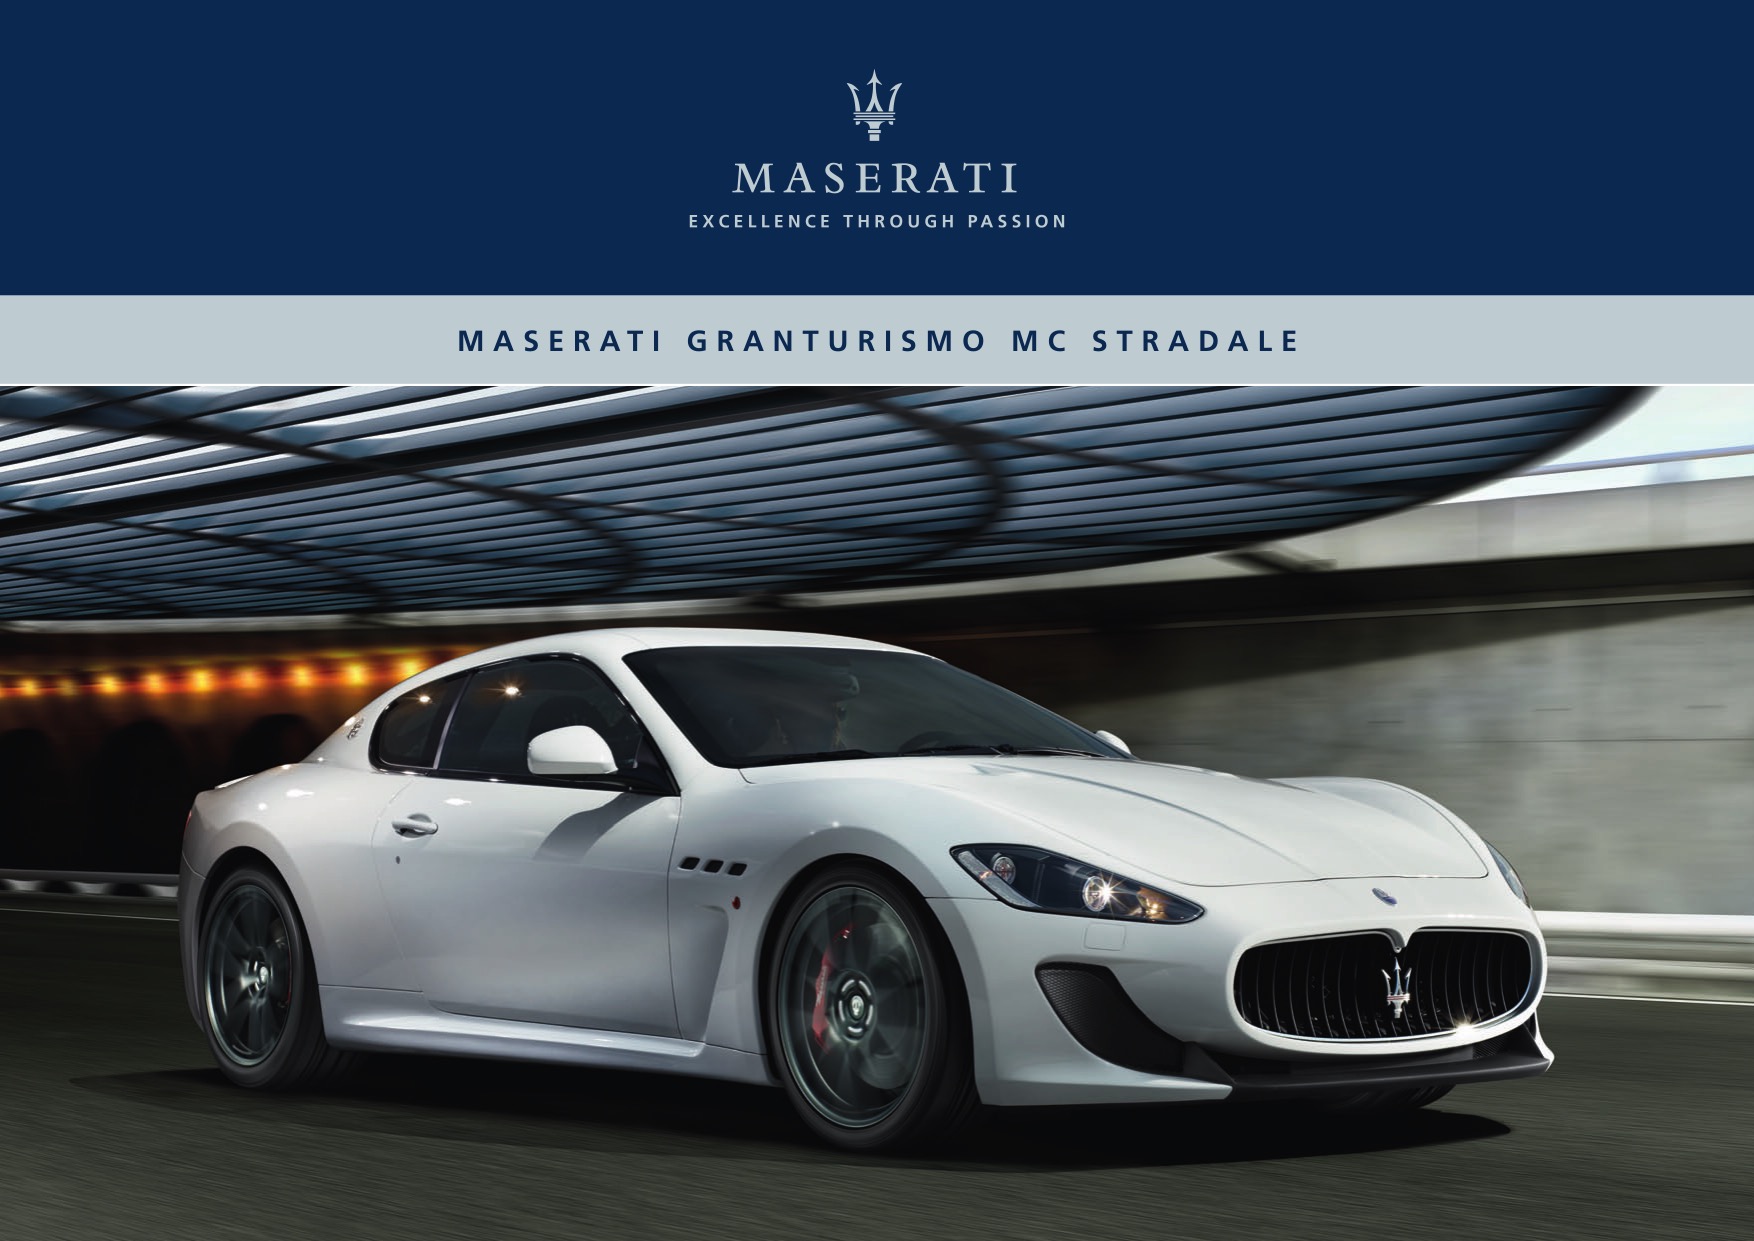 Maserati Granturismo MC Stradale Brochure